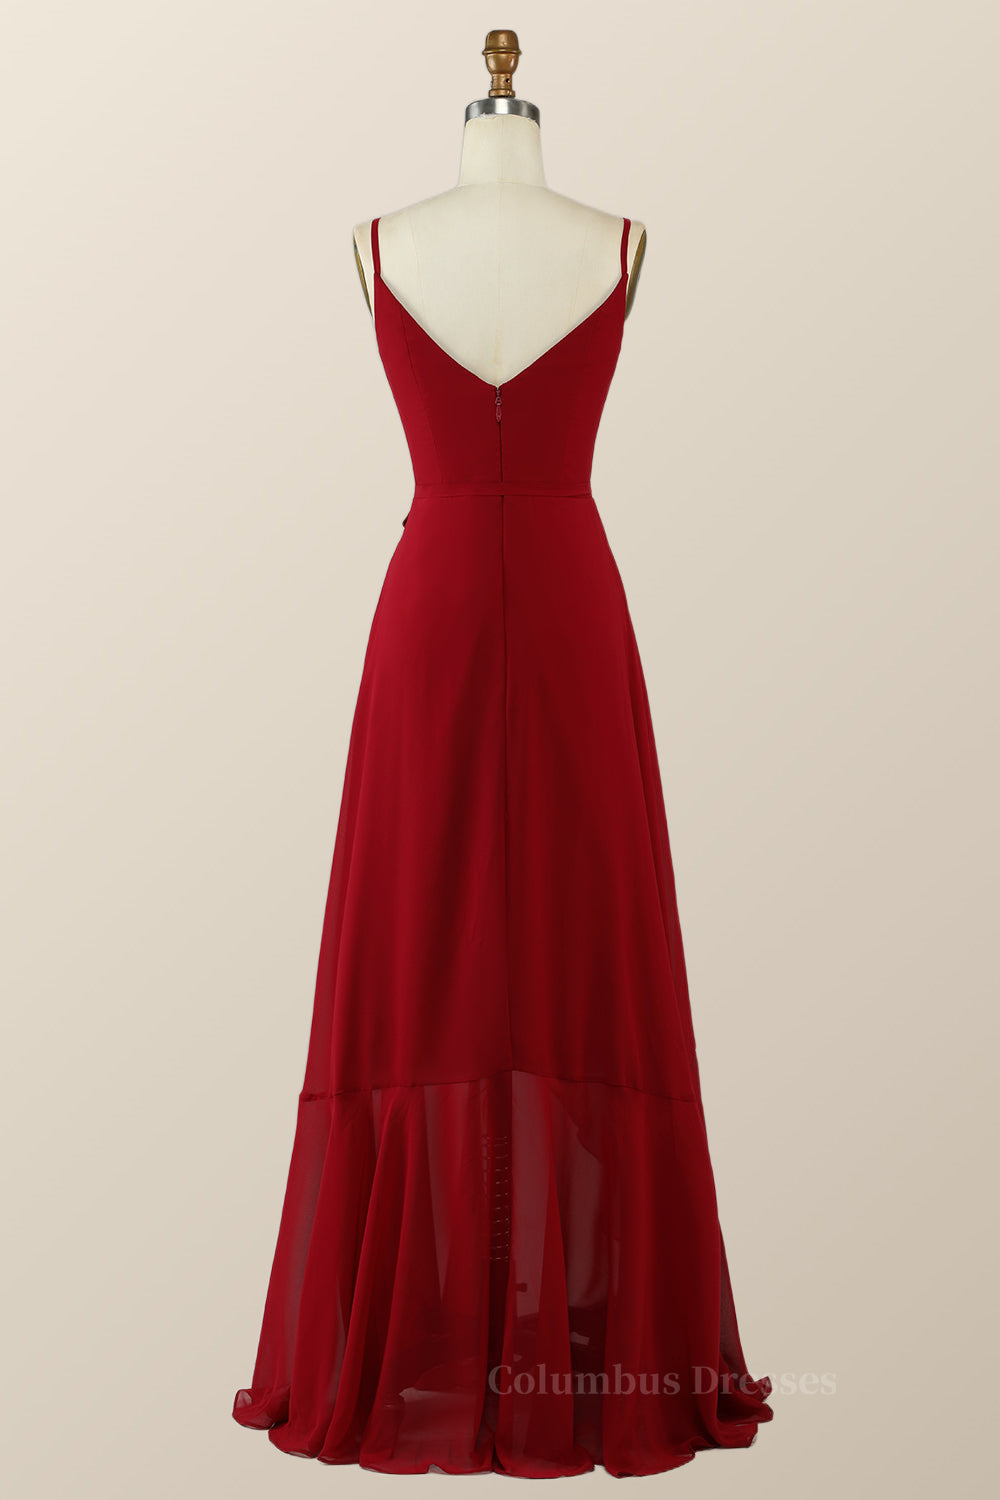 Formal Dresses For Weddings, Wine Red Chiffon Wrap Ruffle Long Bridesmaid Dress